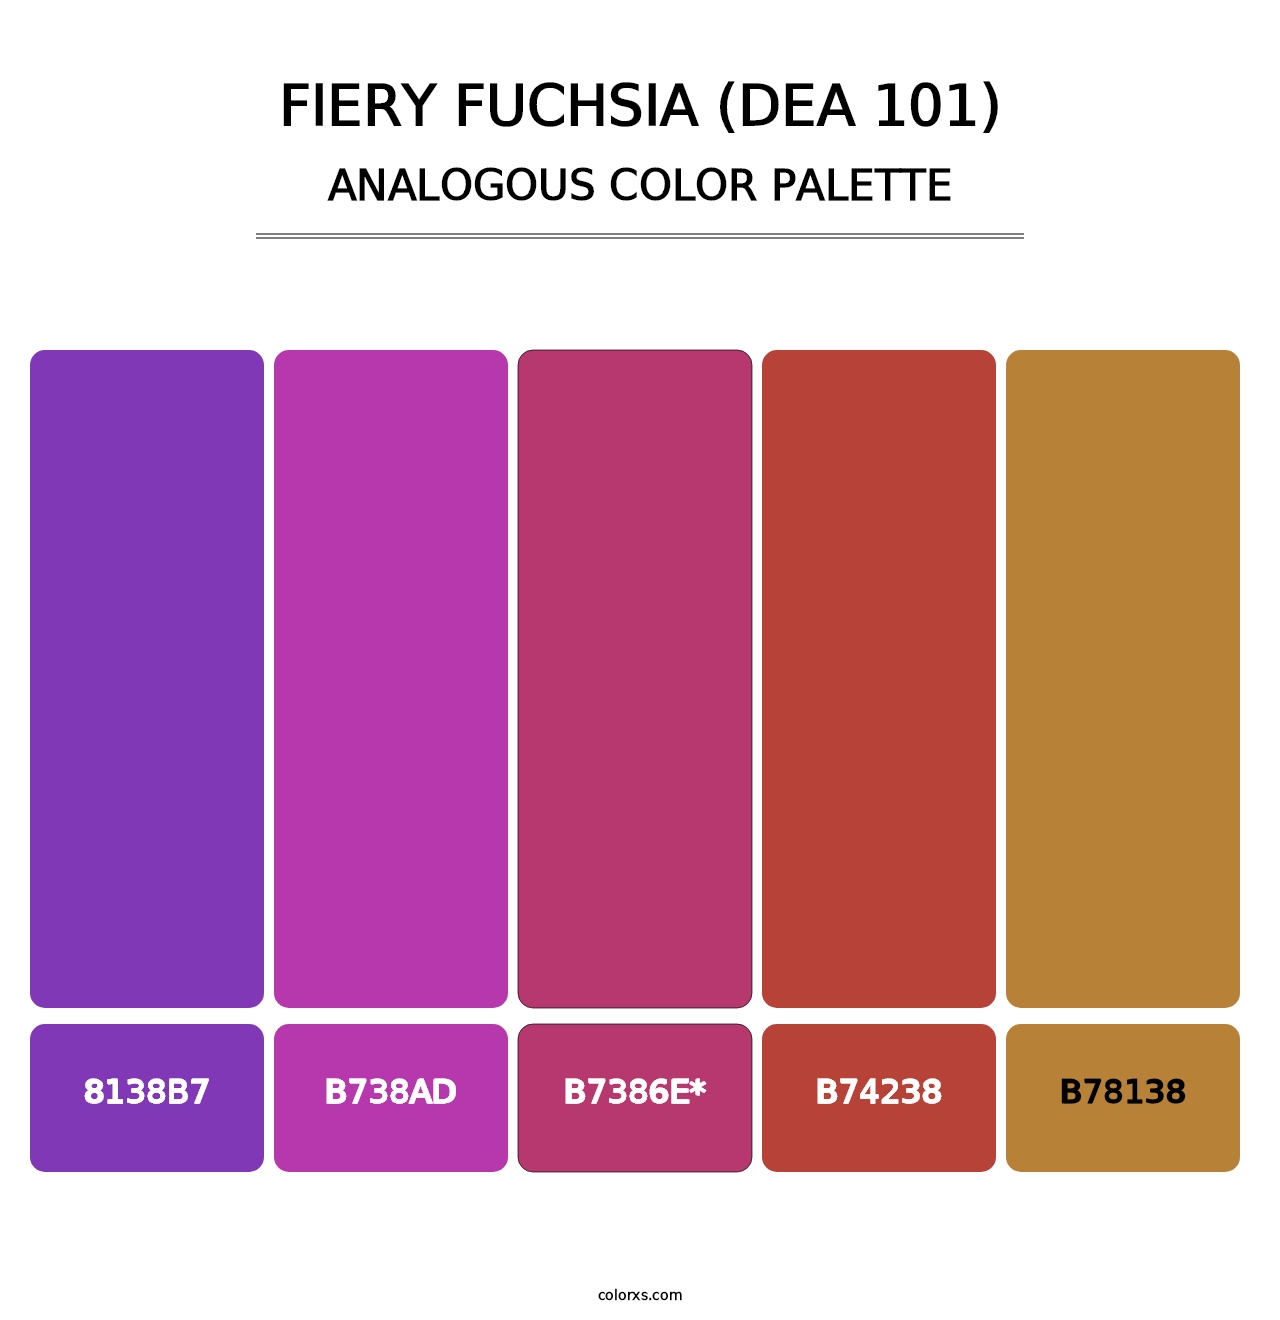 Fiery Fuchsia (DEA 101) - Analogous Color Palette